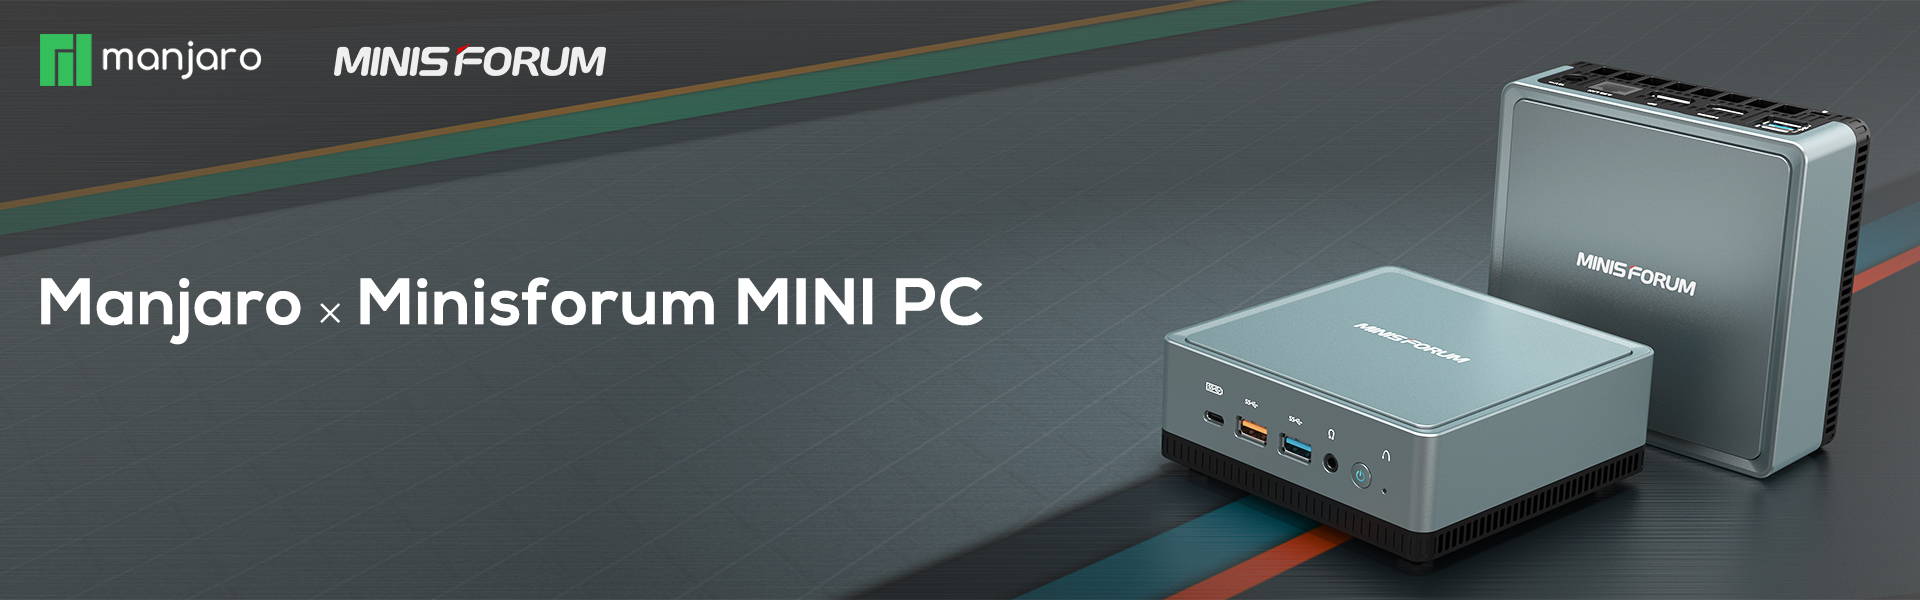 AMD Ryzen DeskMini UM700 announced with Manjaro Linux